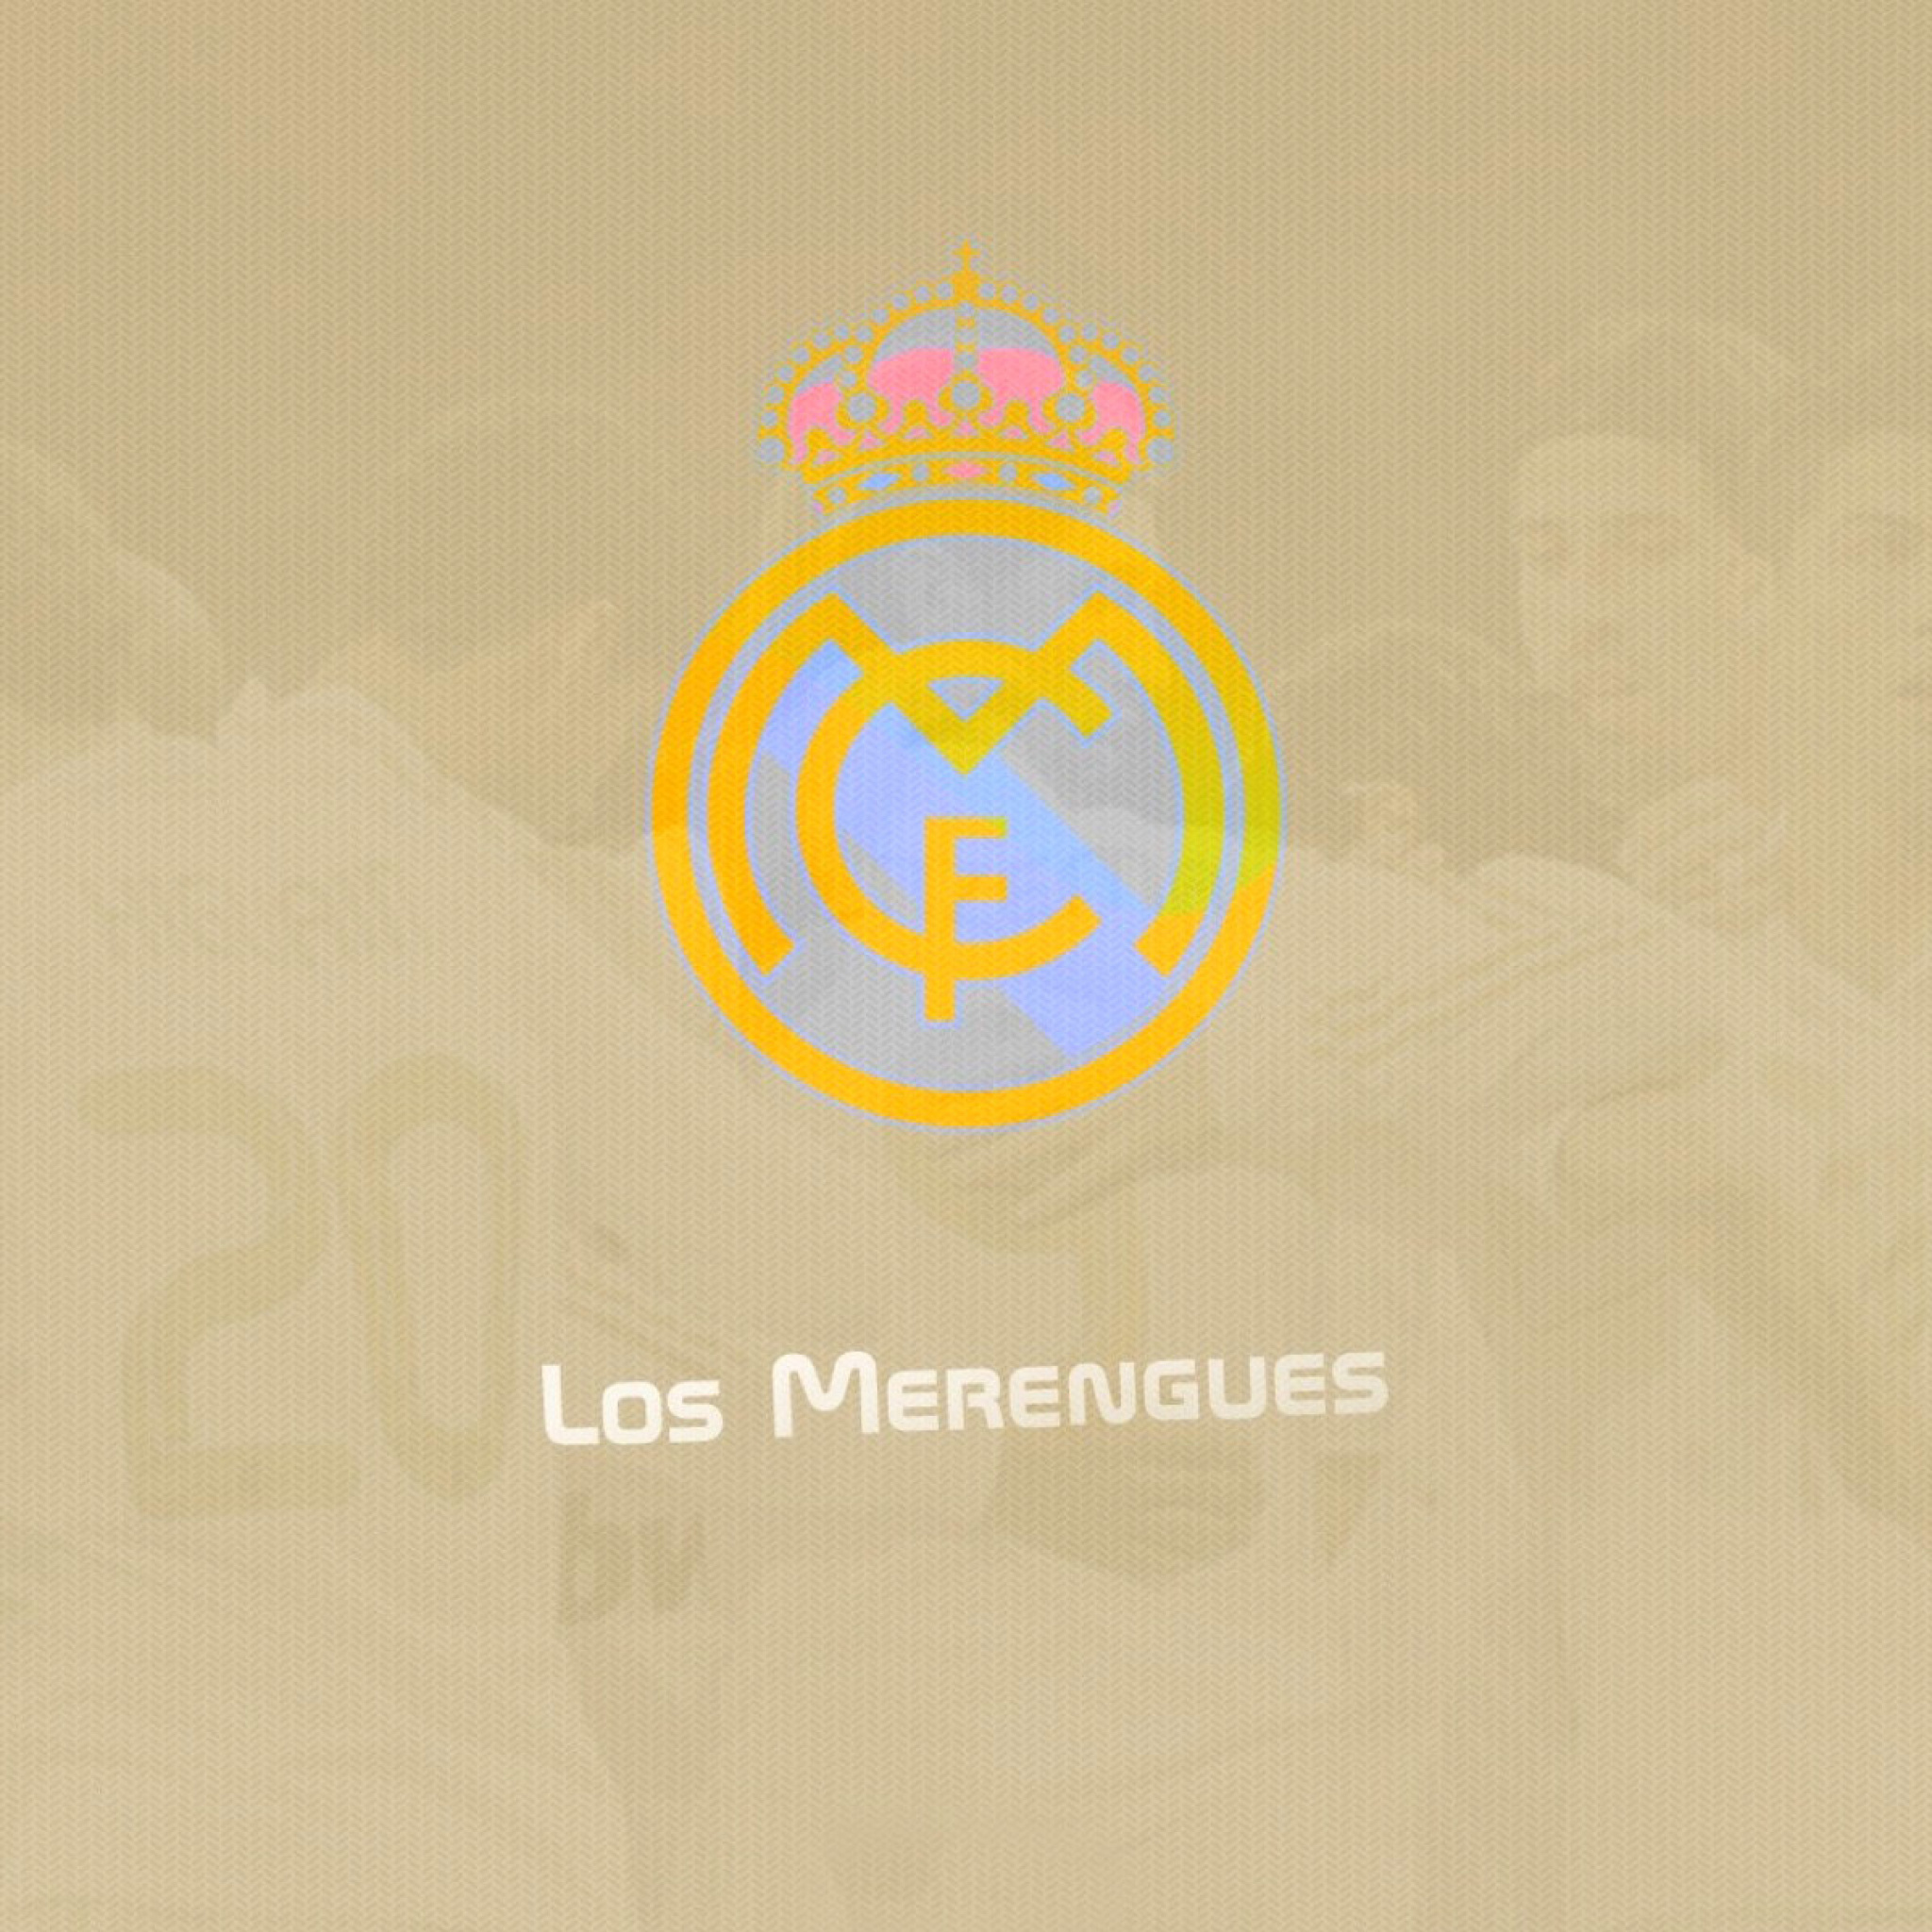 Real Madrid Los Merengues wallpaper 2048x2048